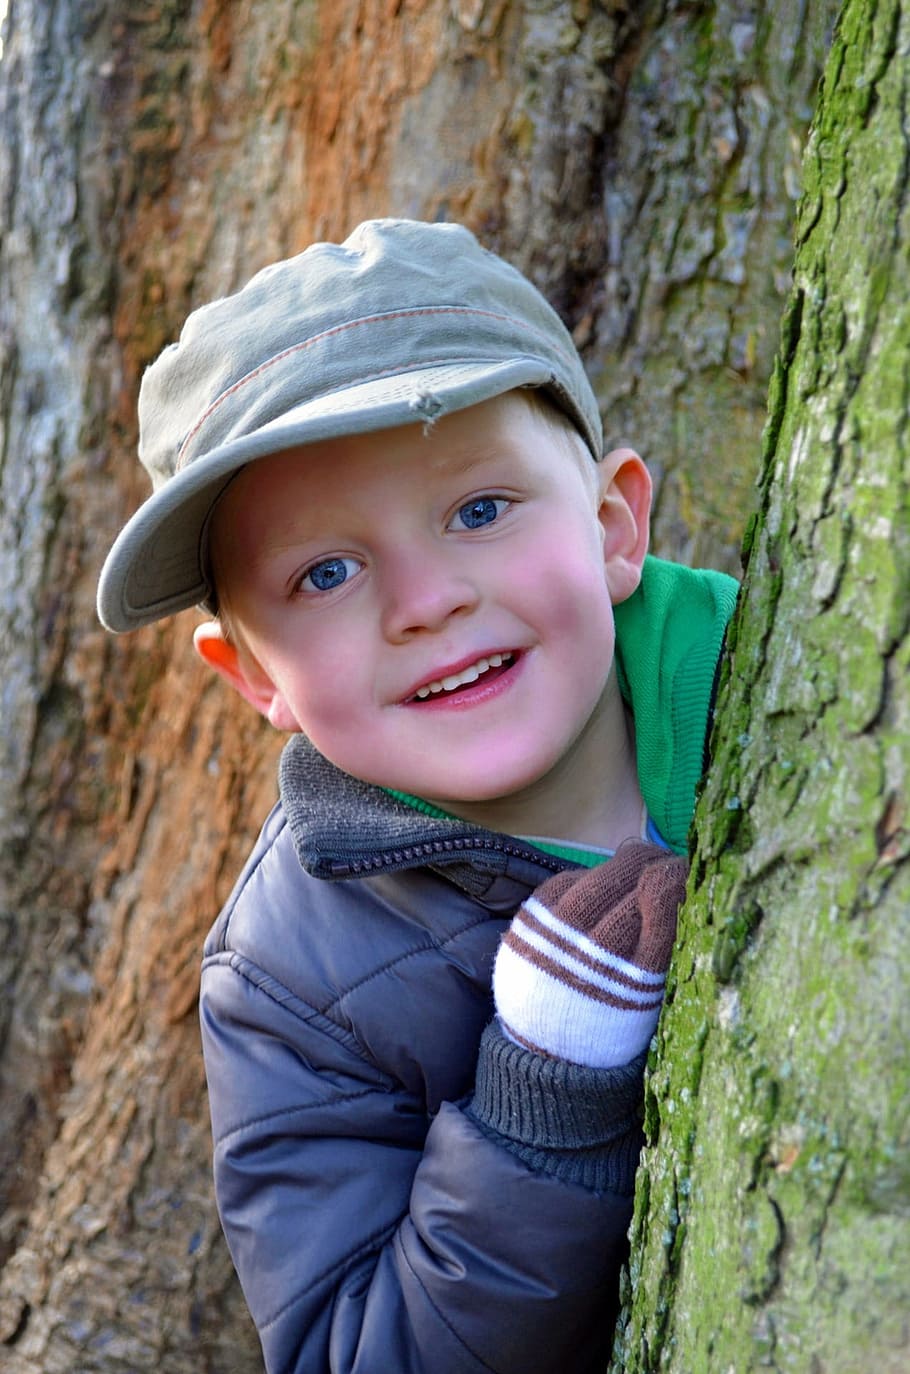 smiling boy wearing gray cap and jacket peeking beside tree trunk with moss